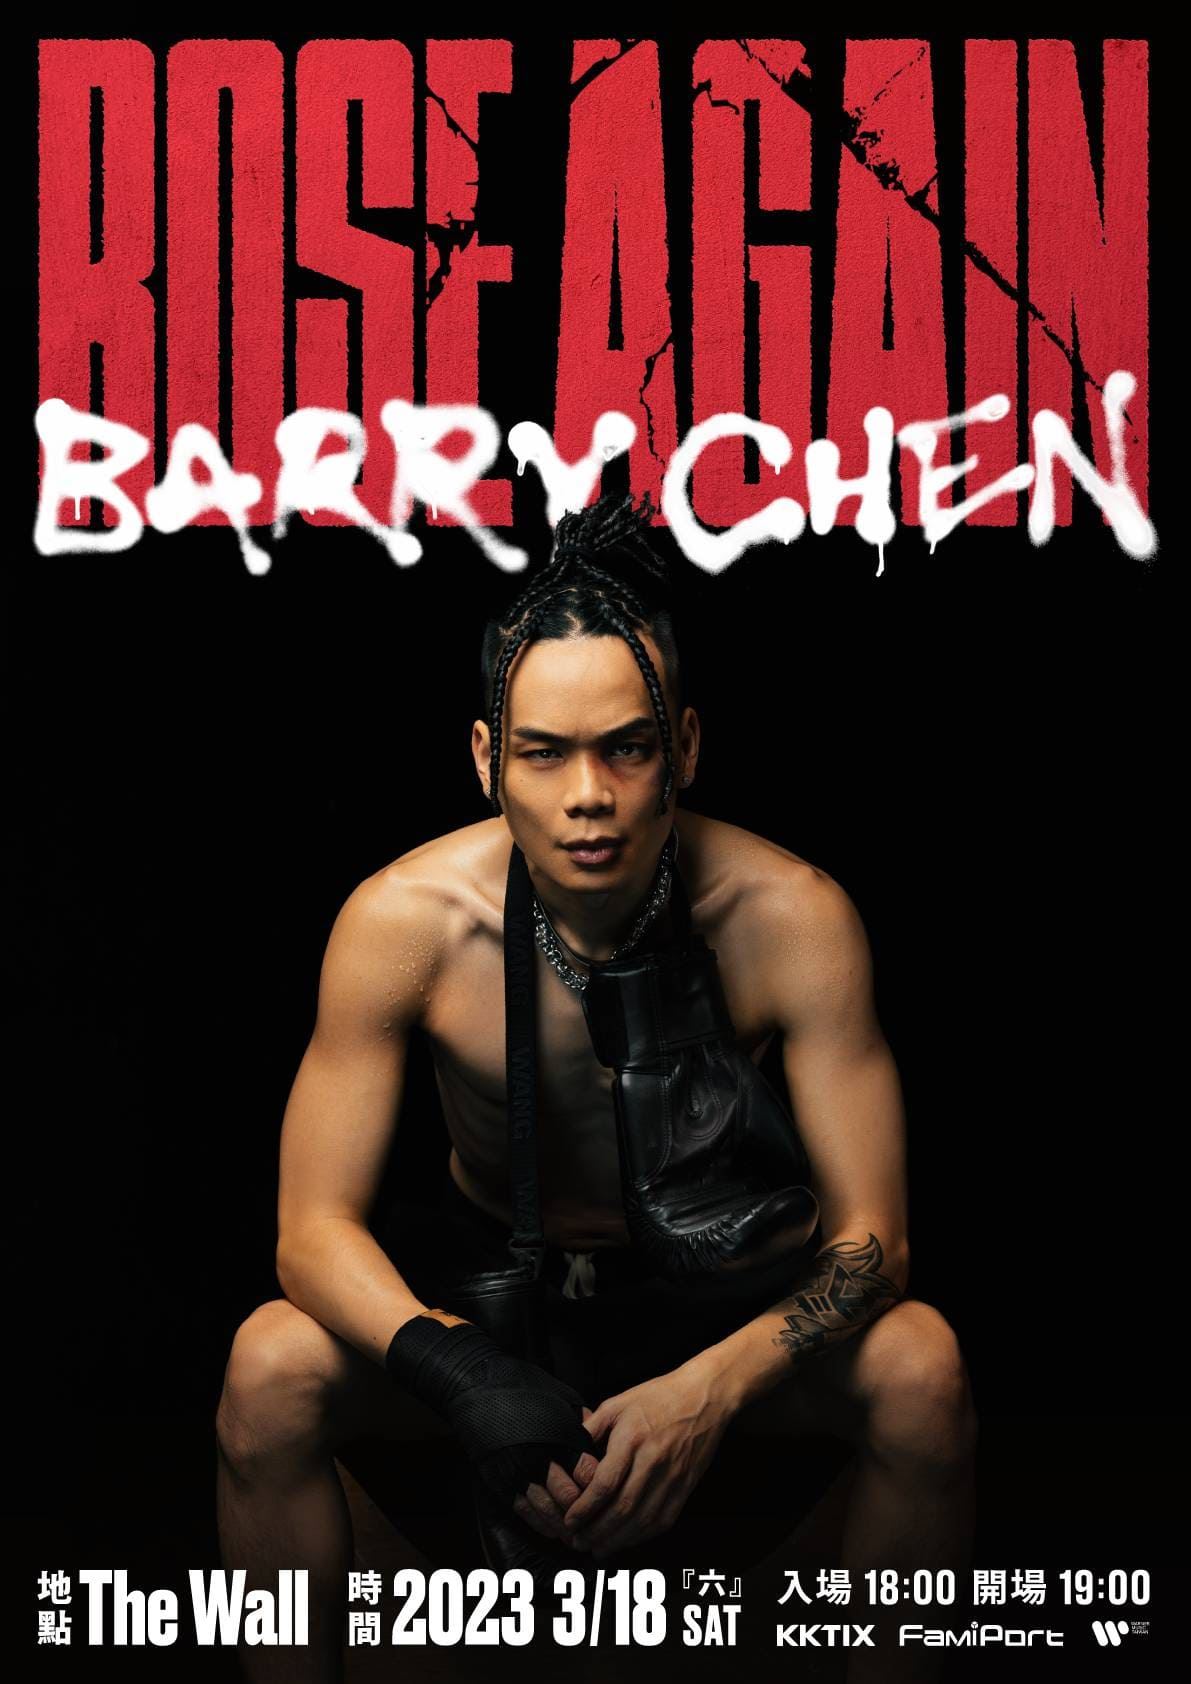 Barry Chen专辑名称致敬NBA球星！分享饶舌之路充满荆棘　事件完整分析